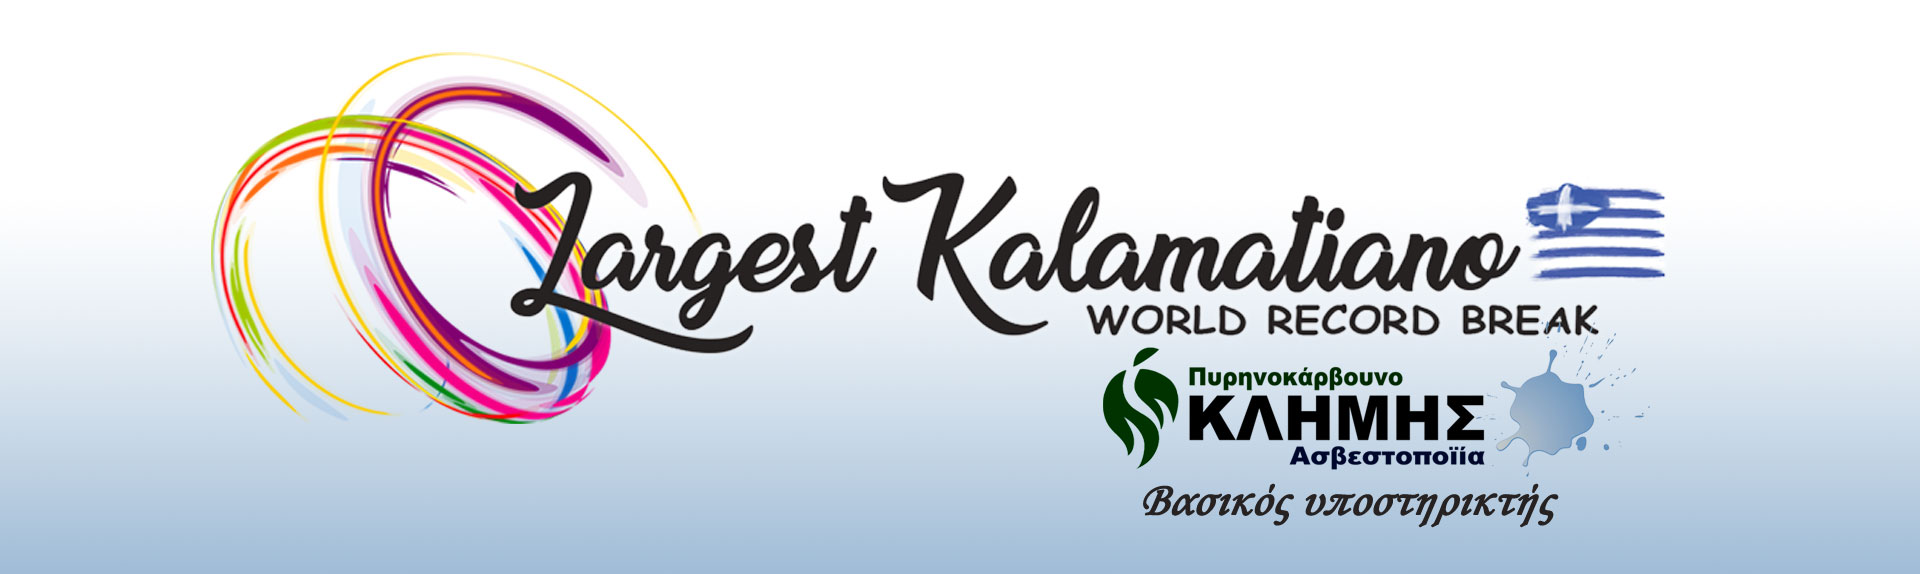 Kalamatiano Guinness World Record